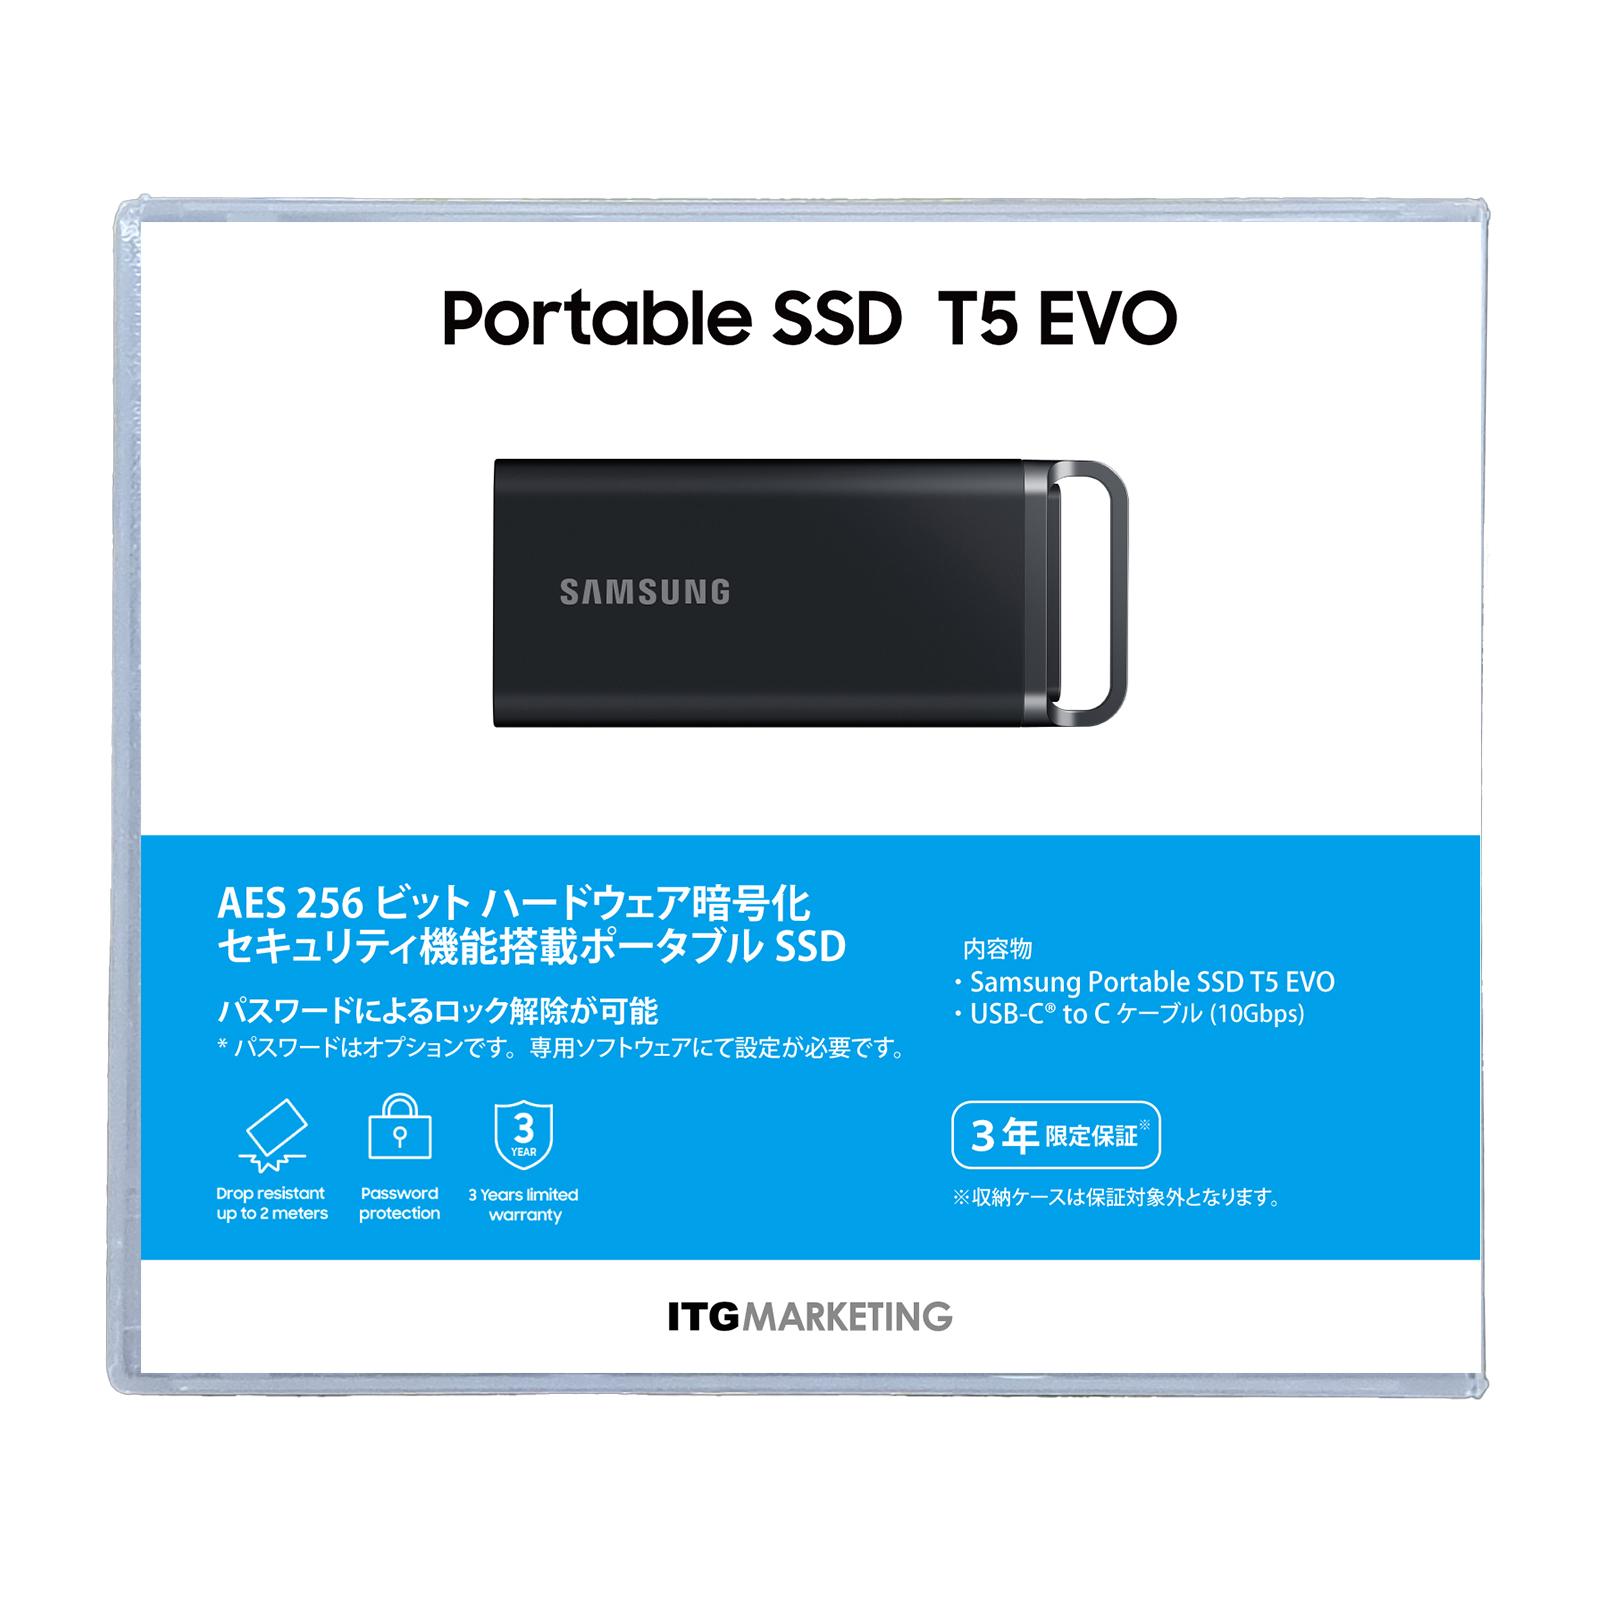 Samsung Portable SSD T5 EVO（8TB）放送局向け専用ケース入りモデル